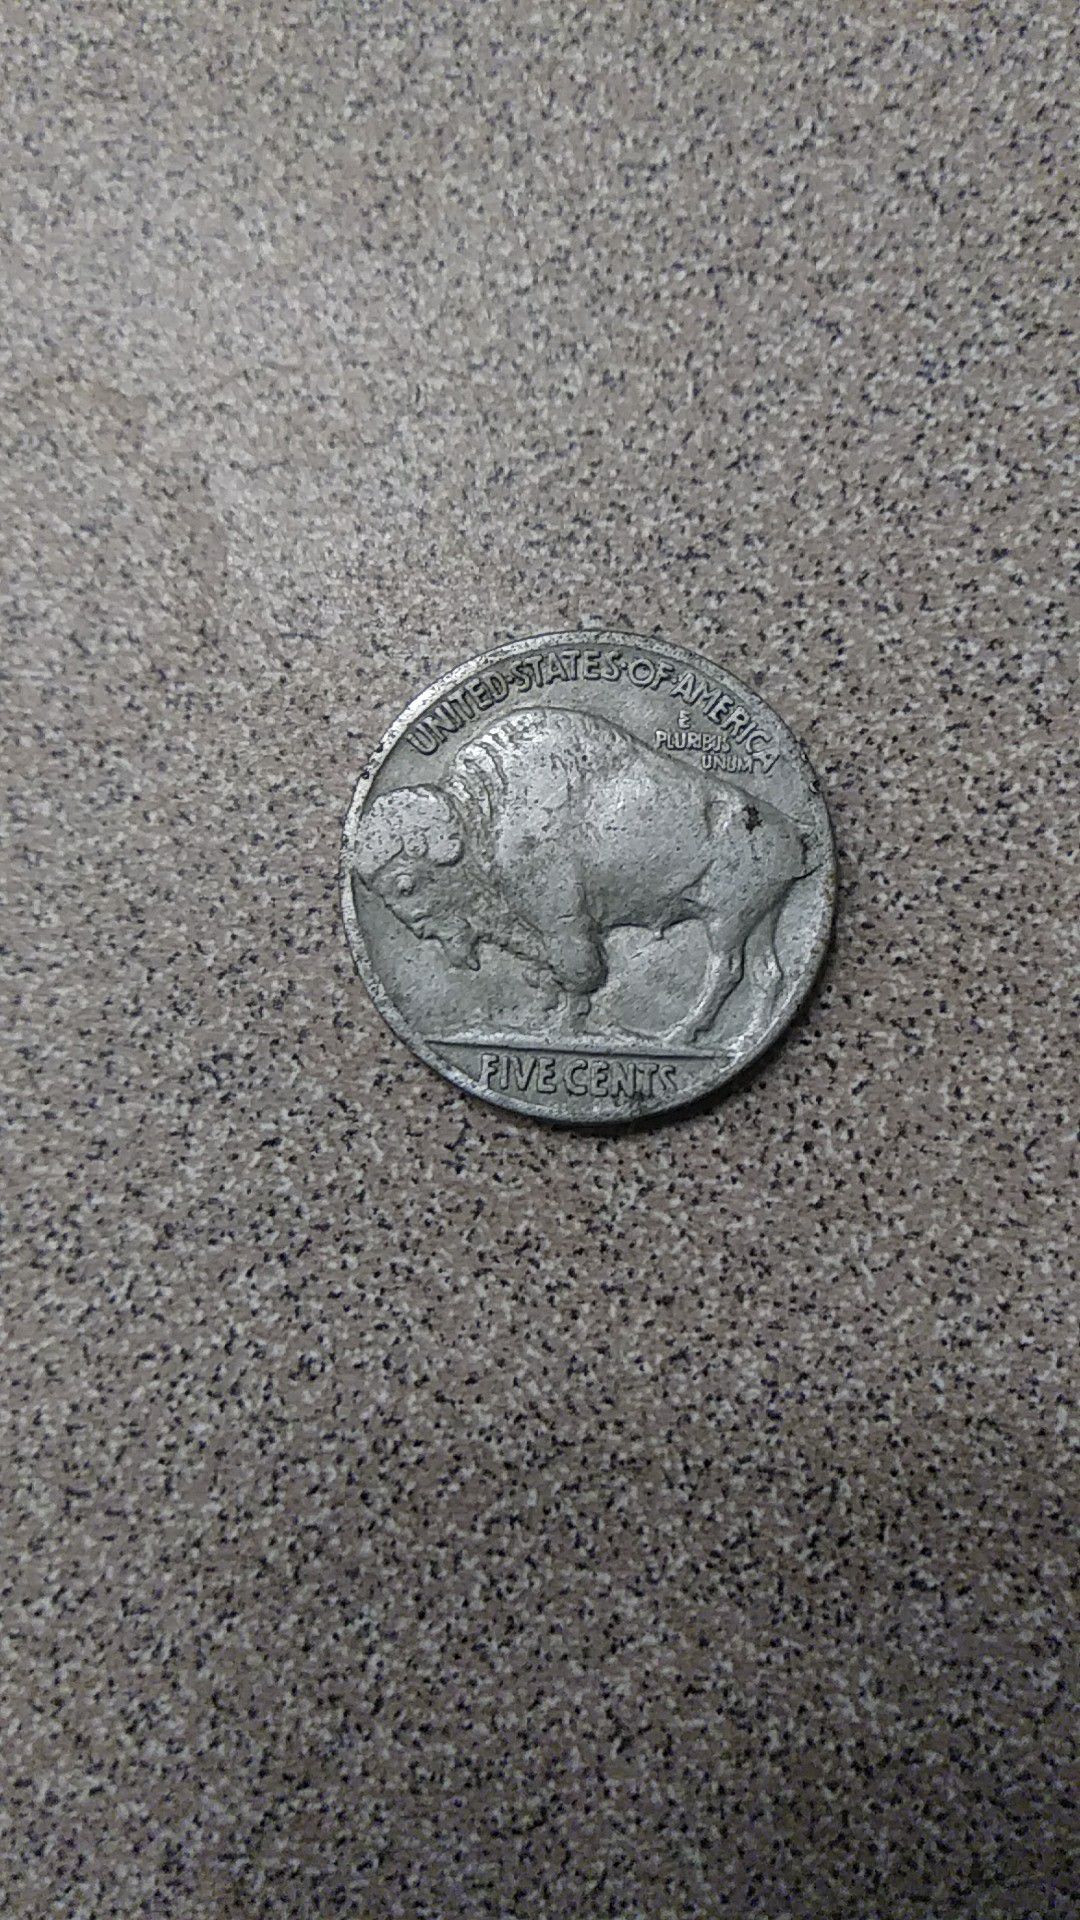 Indian Head rare nickel mint condition Buffalo nickel